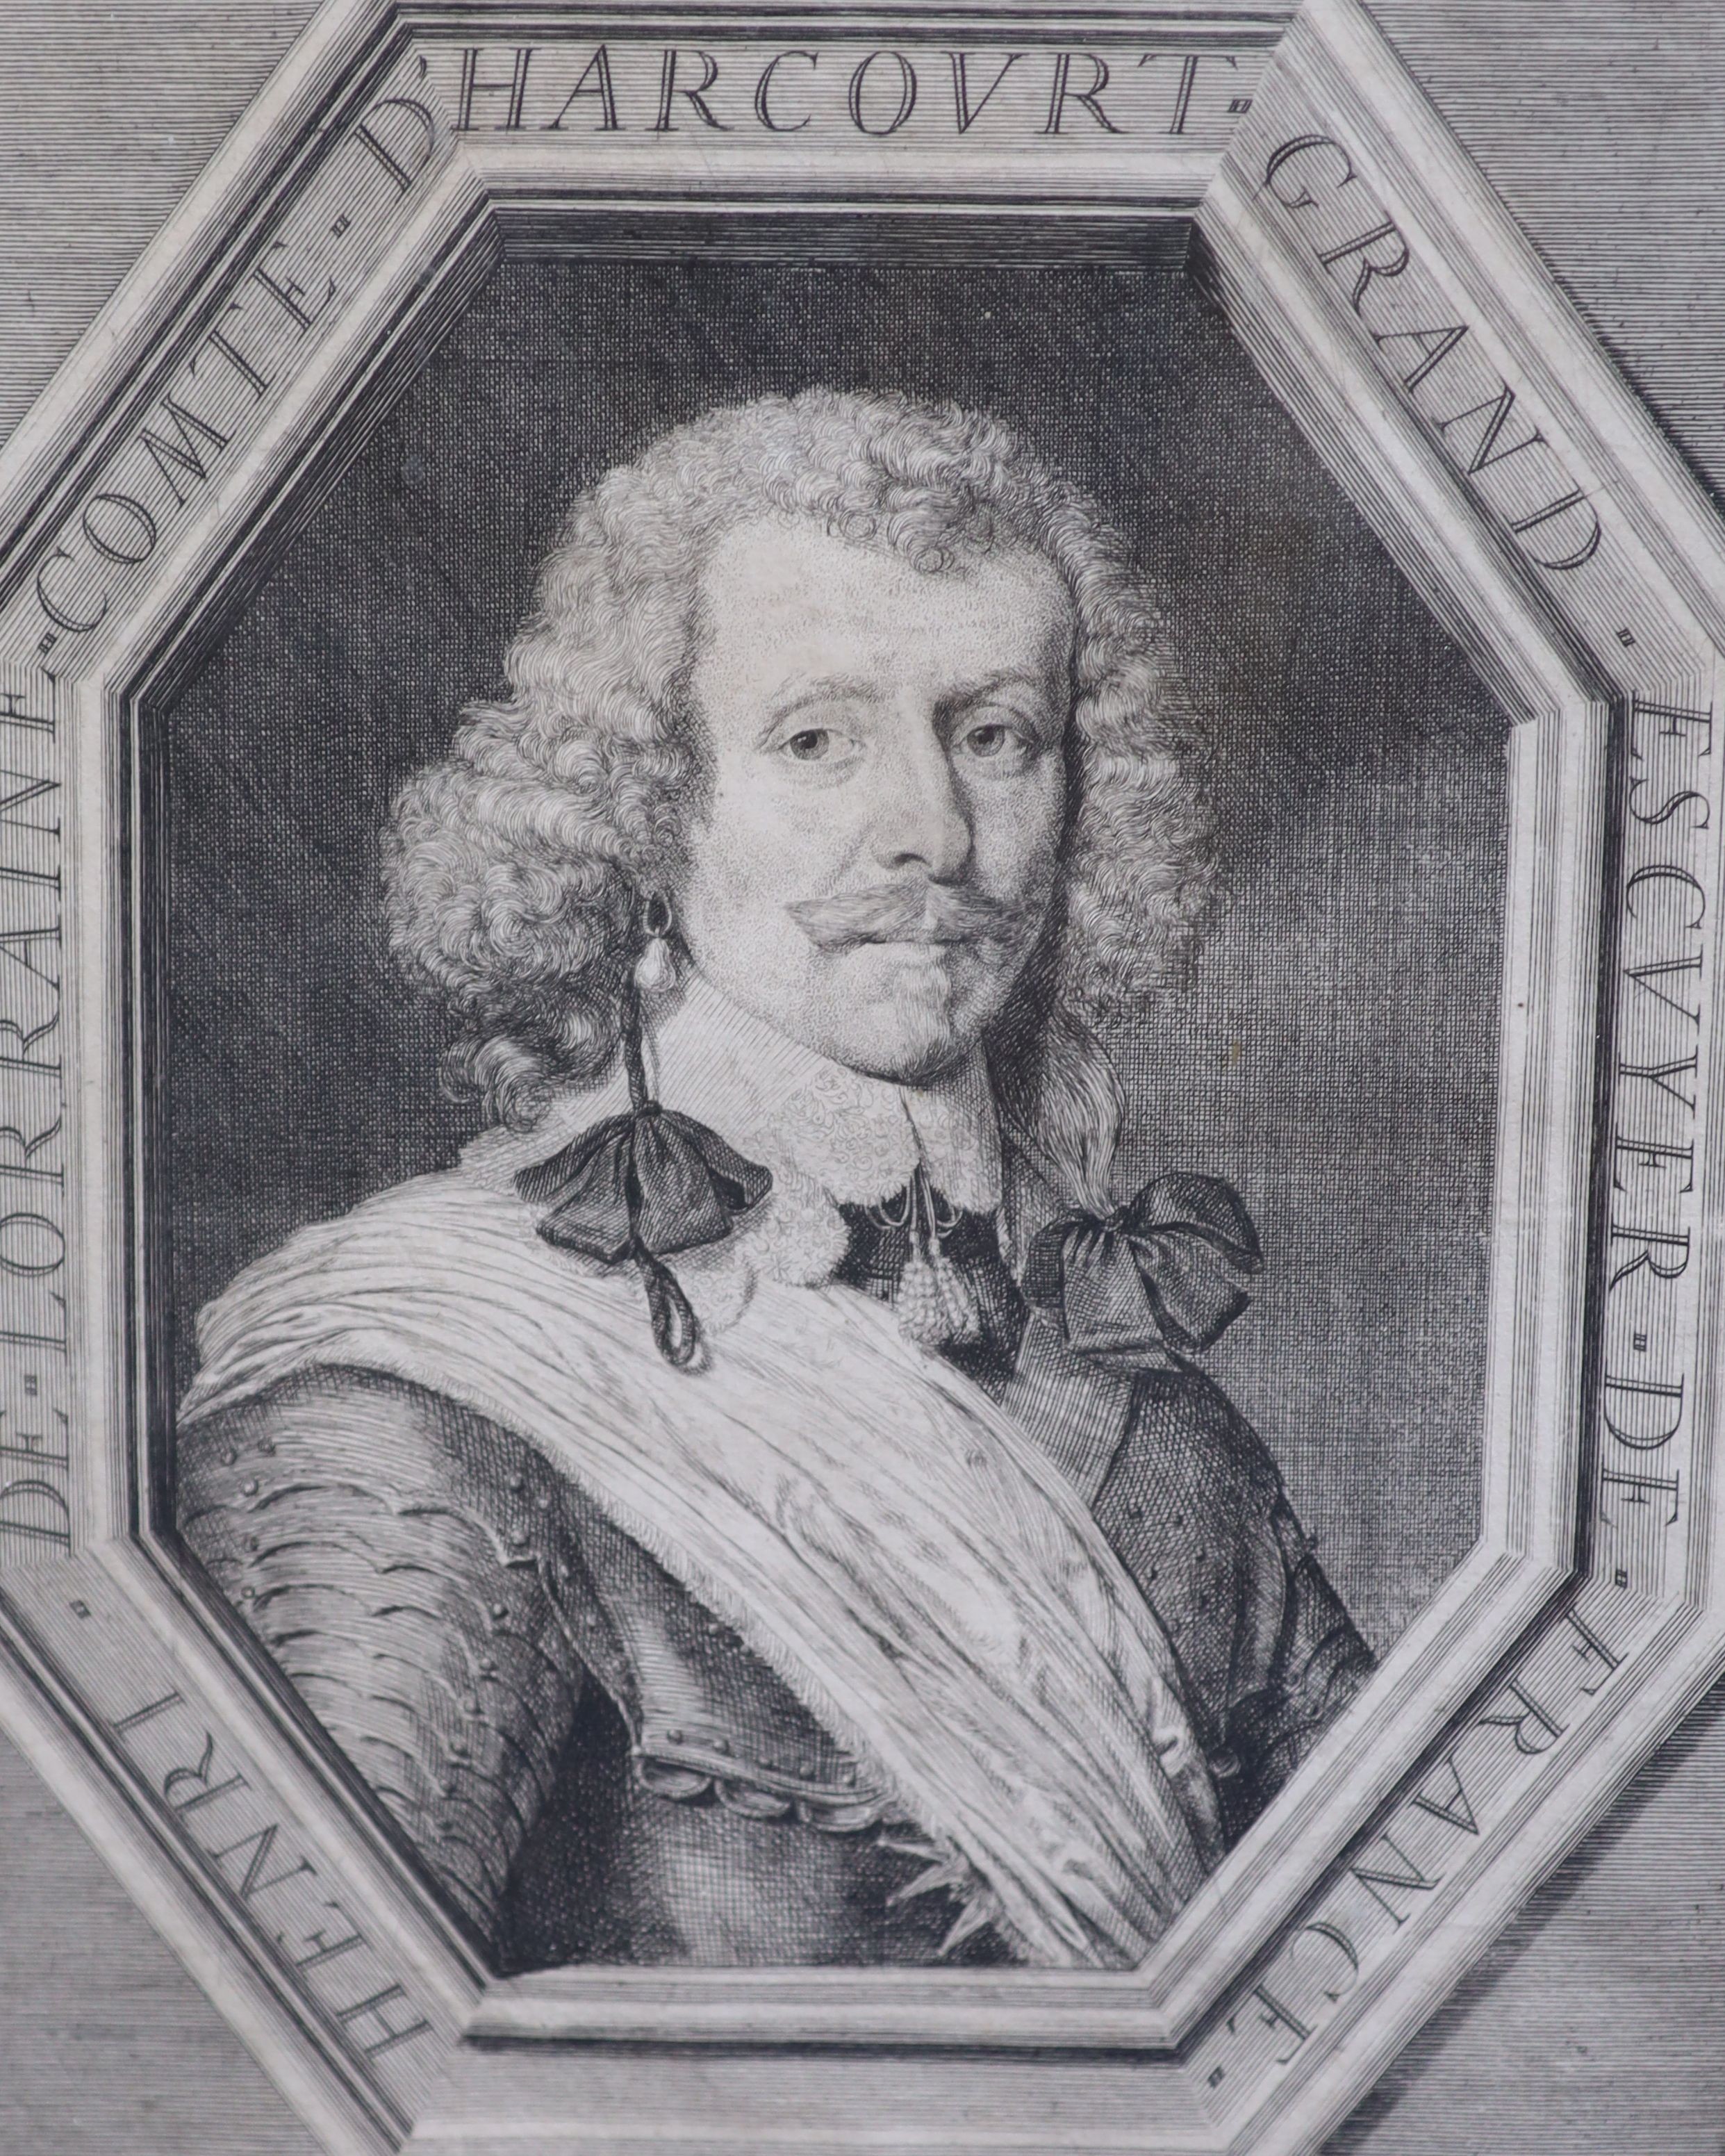 After Robert Nanteuil, Portraits of noblemen, Copper engravings (16), Largest 51 x 37cm.